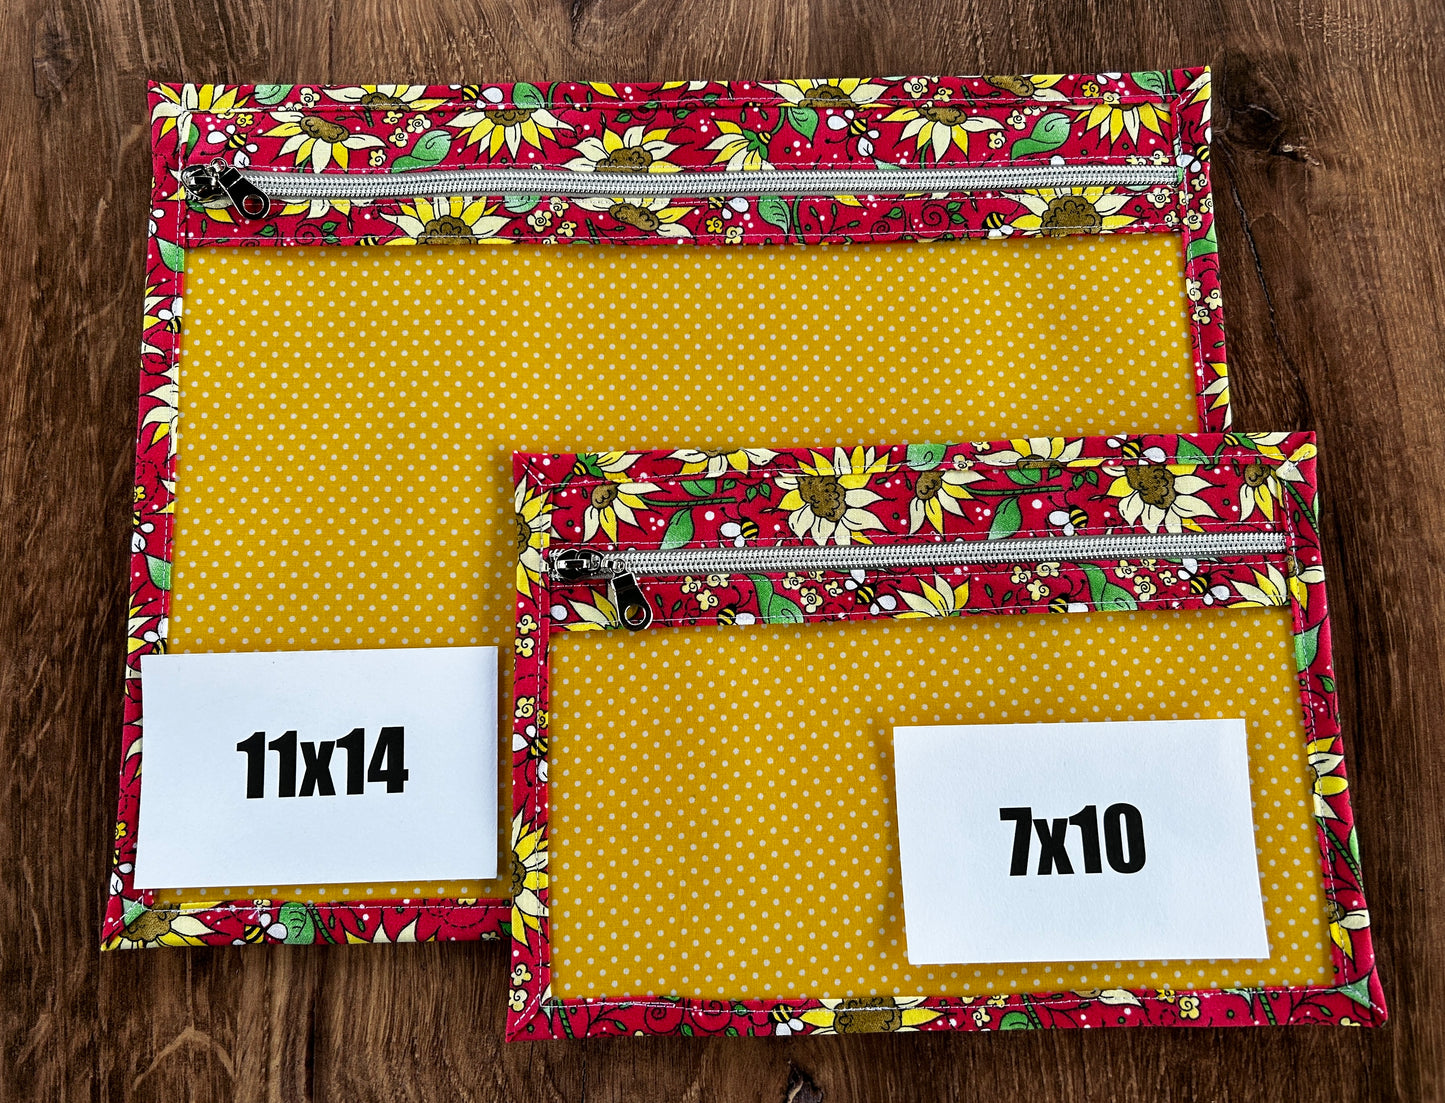 Vinyl Cross Stitch Project Bag - Embroidery bag - Project Bag - Knitting & Crochet Bag - Storage - Organizer - Notions - Flower - Sunflower